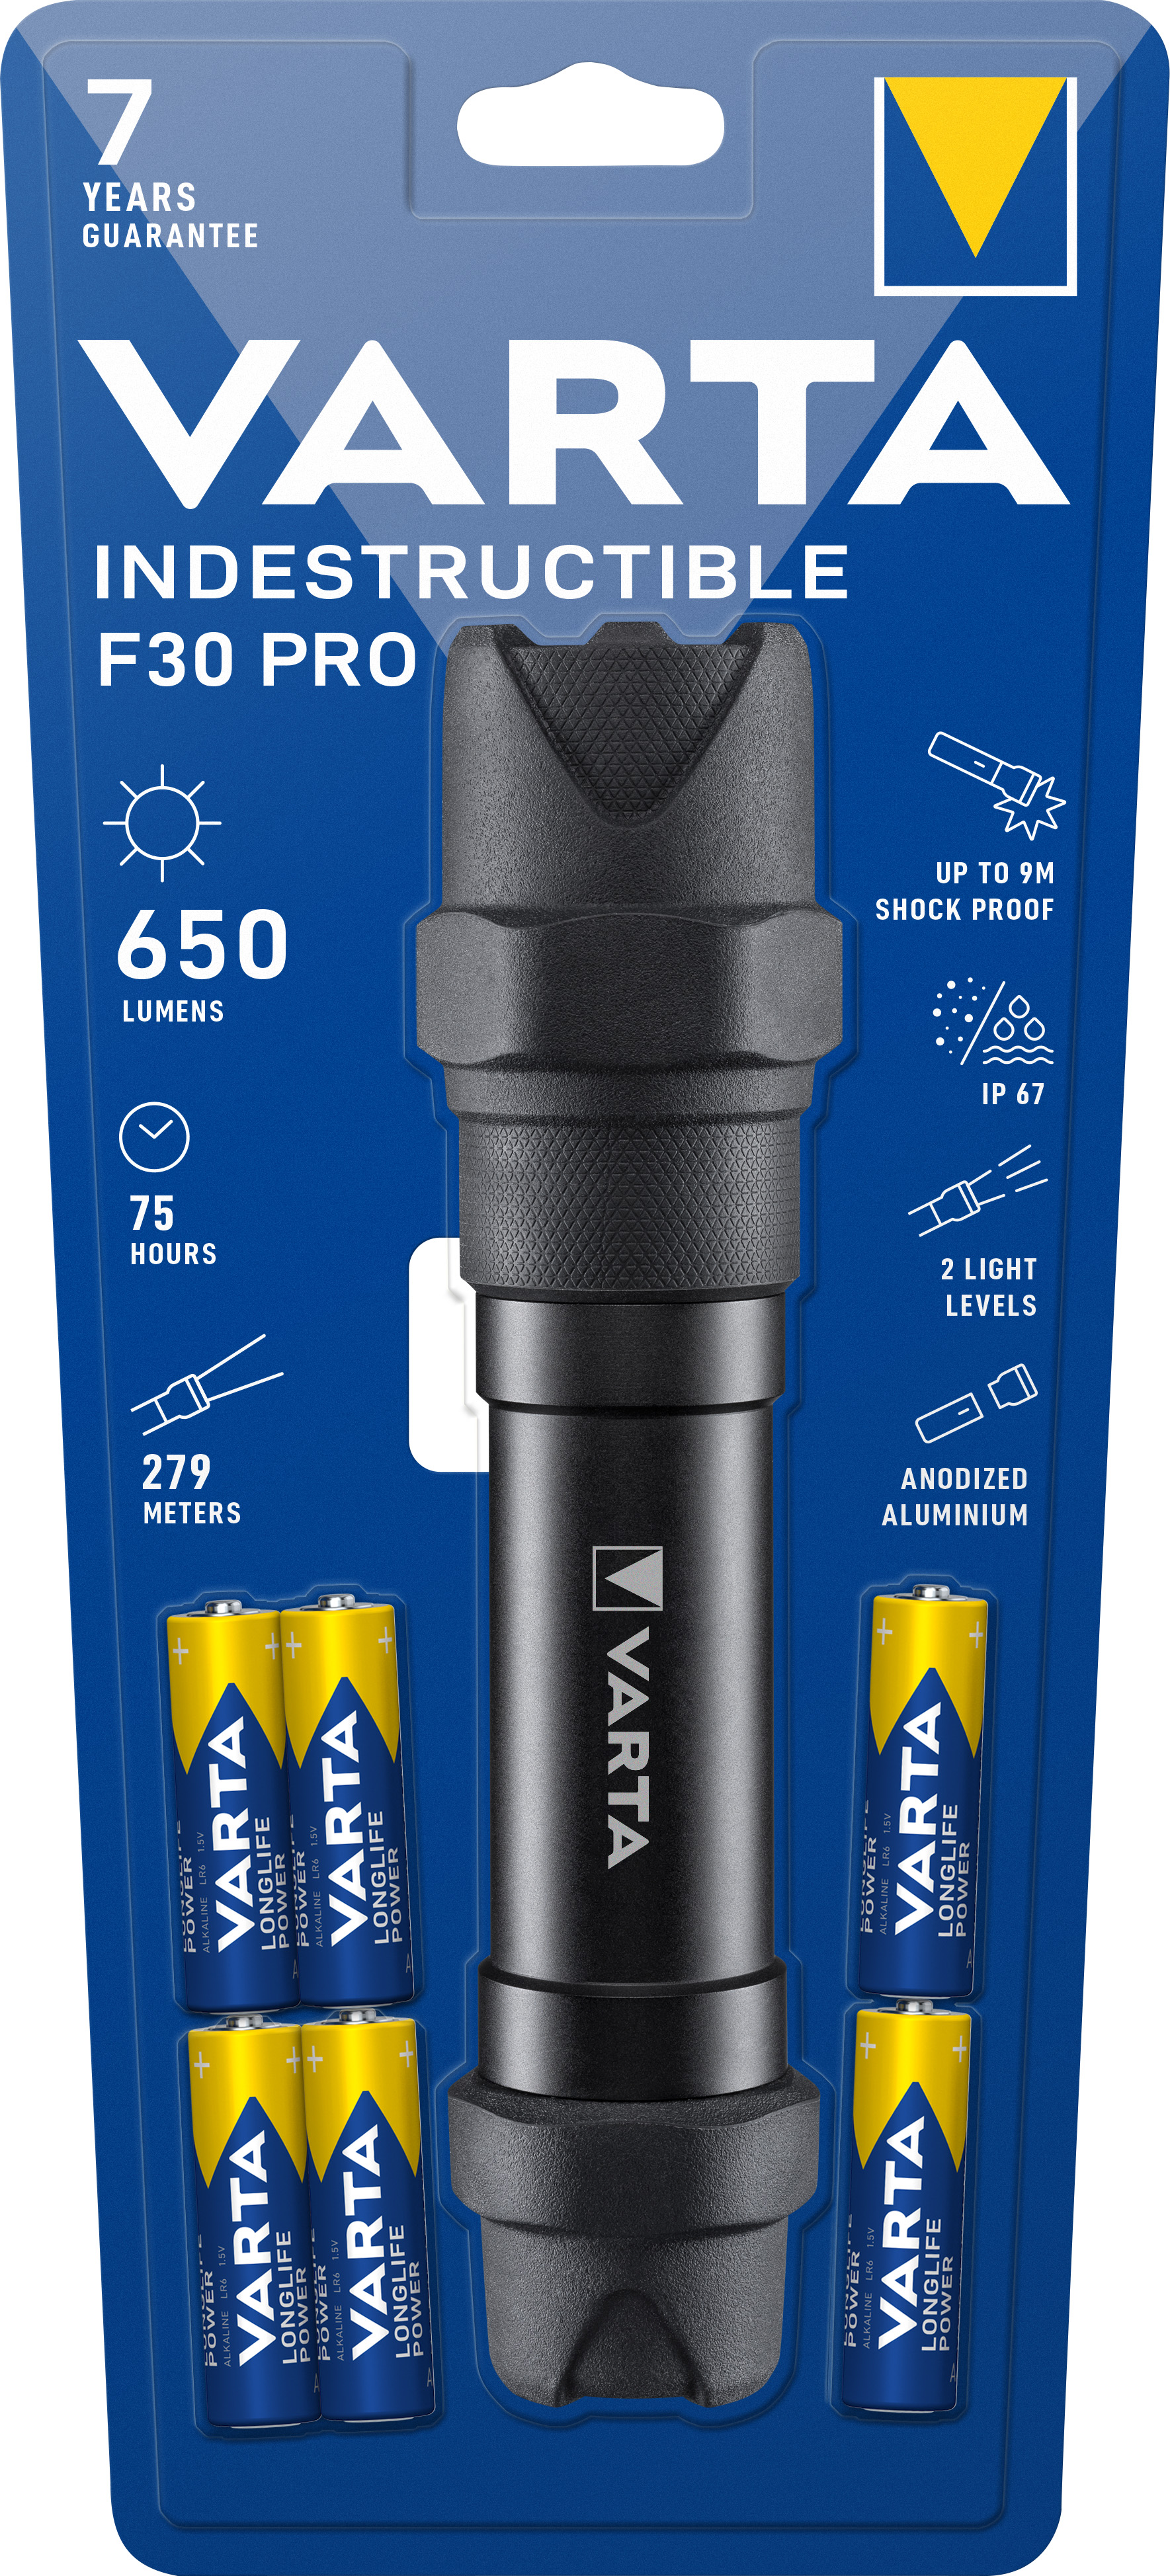 Varta LED Taschenlampe Indestructible, F30 Pro 650lm, inkl. 6x Batterie Alkaline AA, Retail Blister